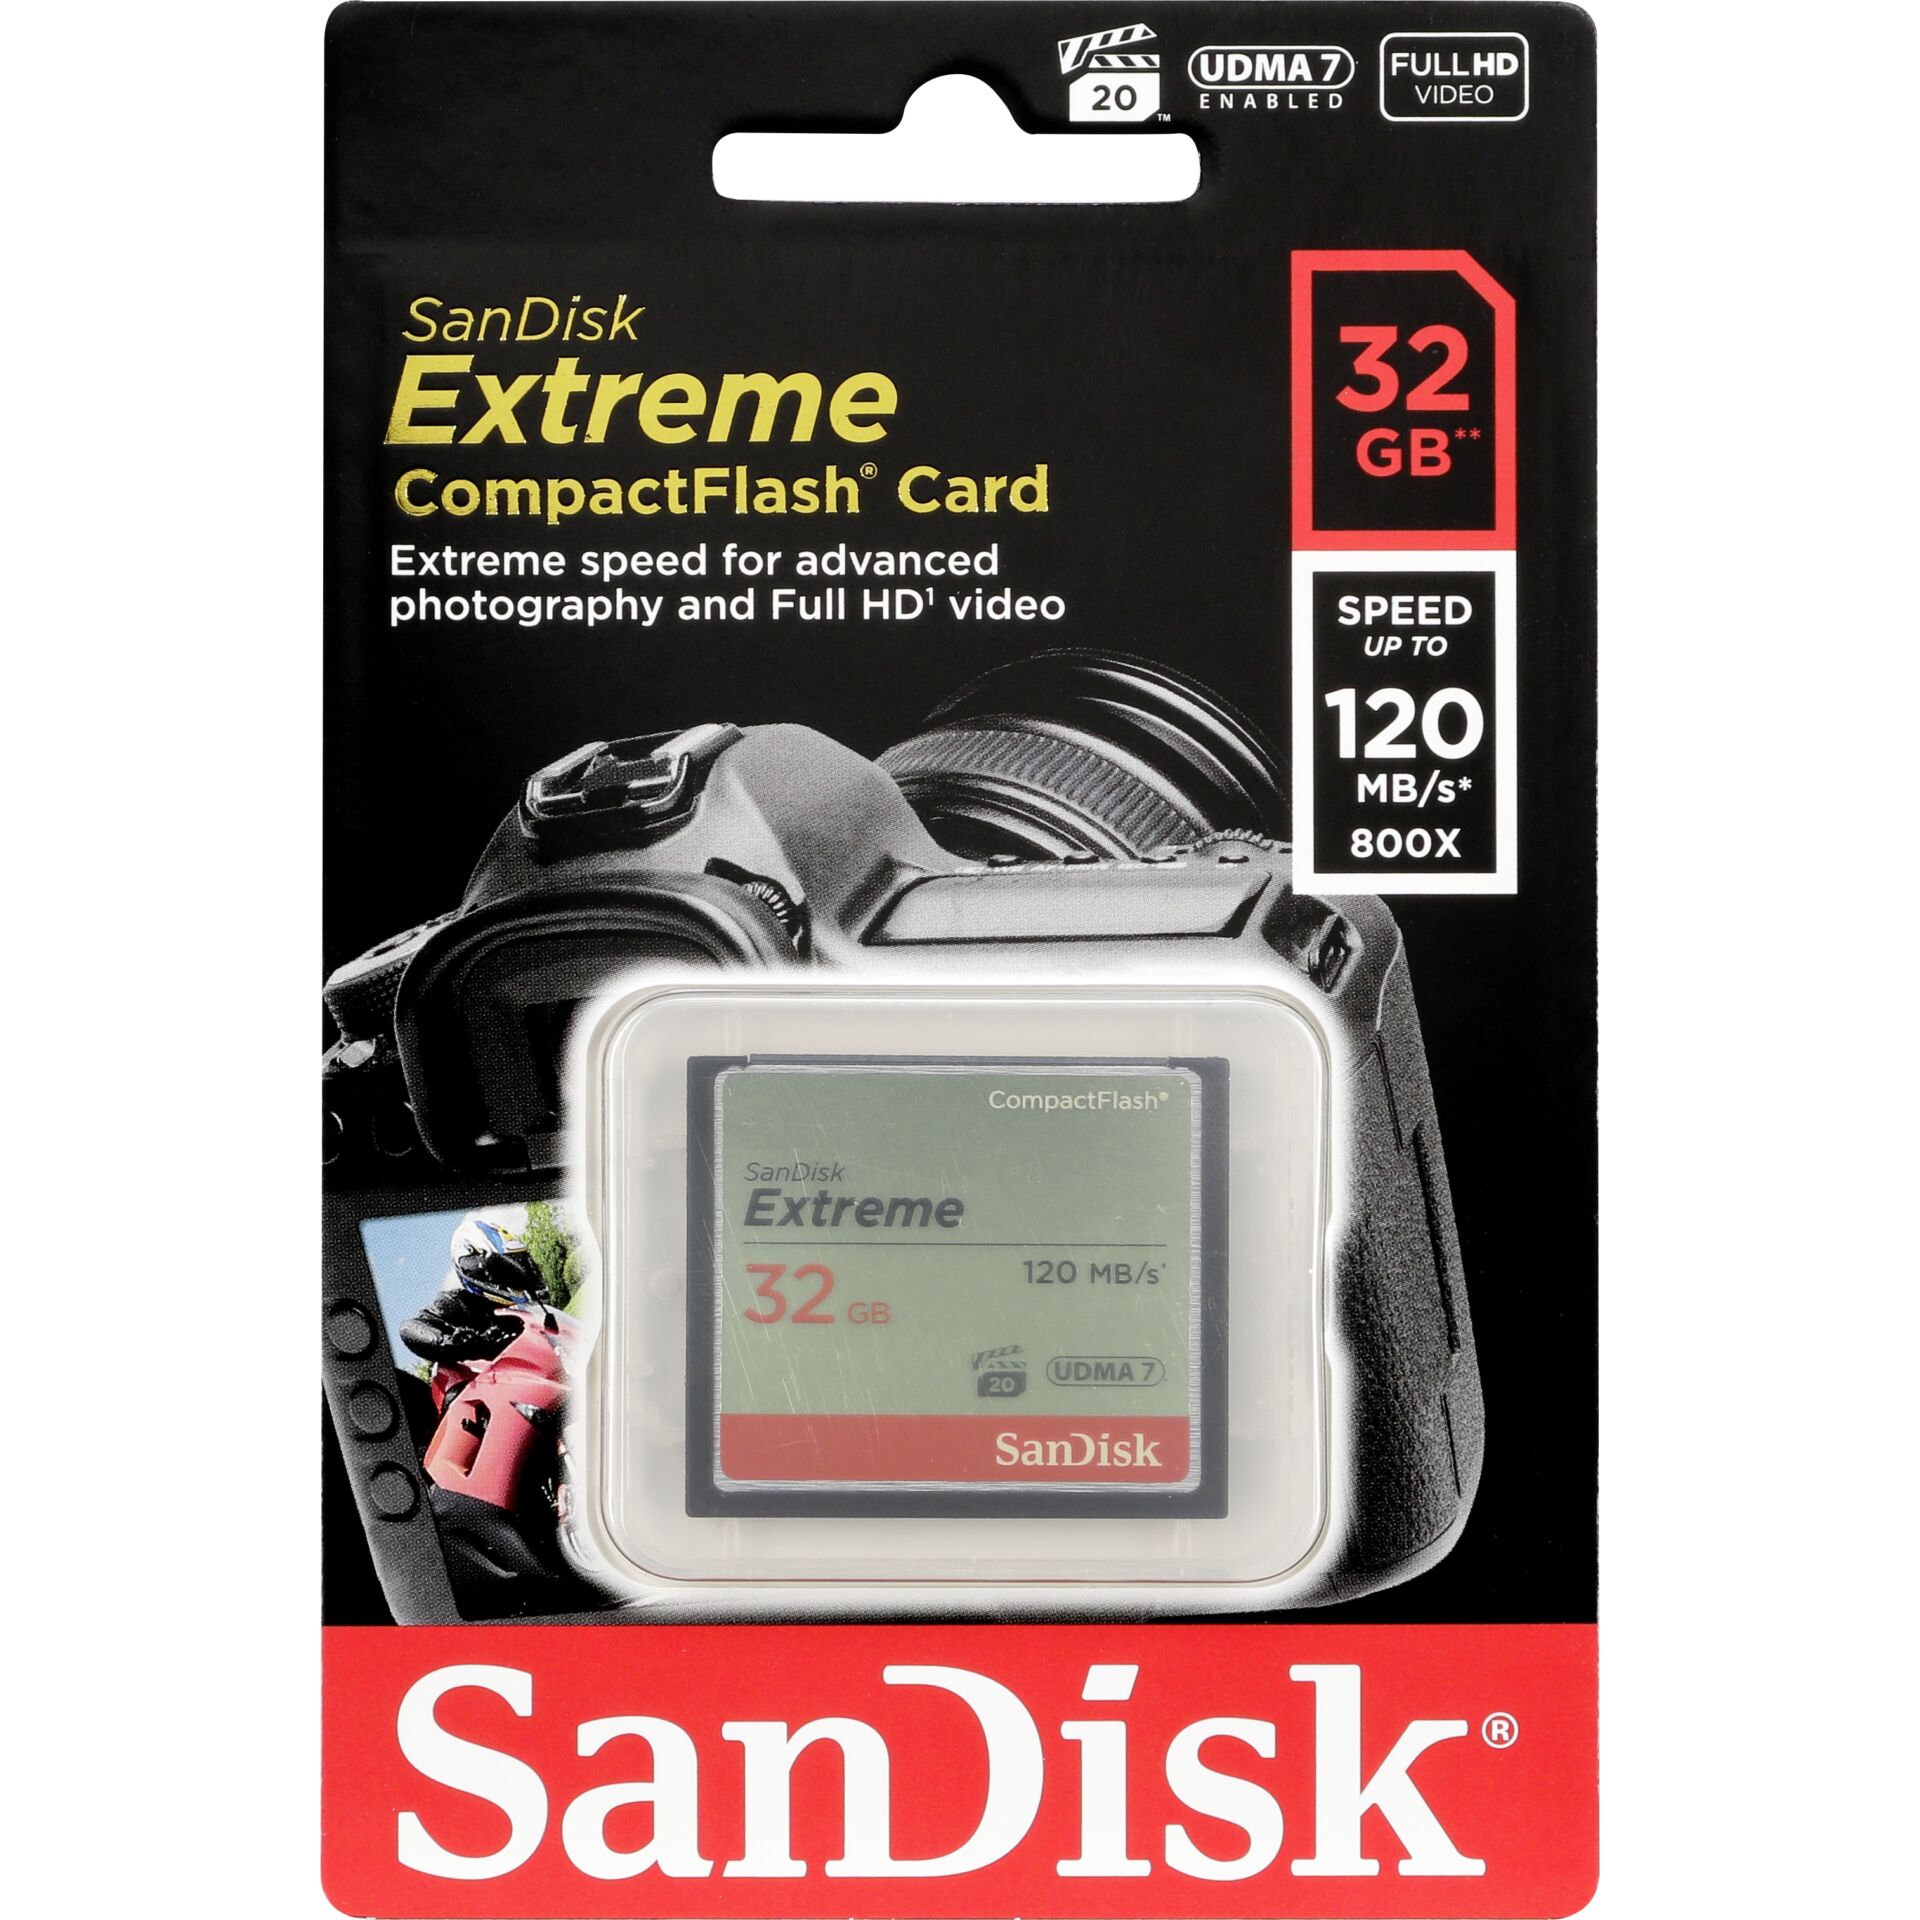 CompactFlash 32GB SanDisk Extreme, 120MB/s 